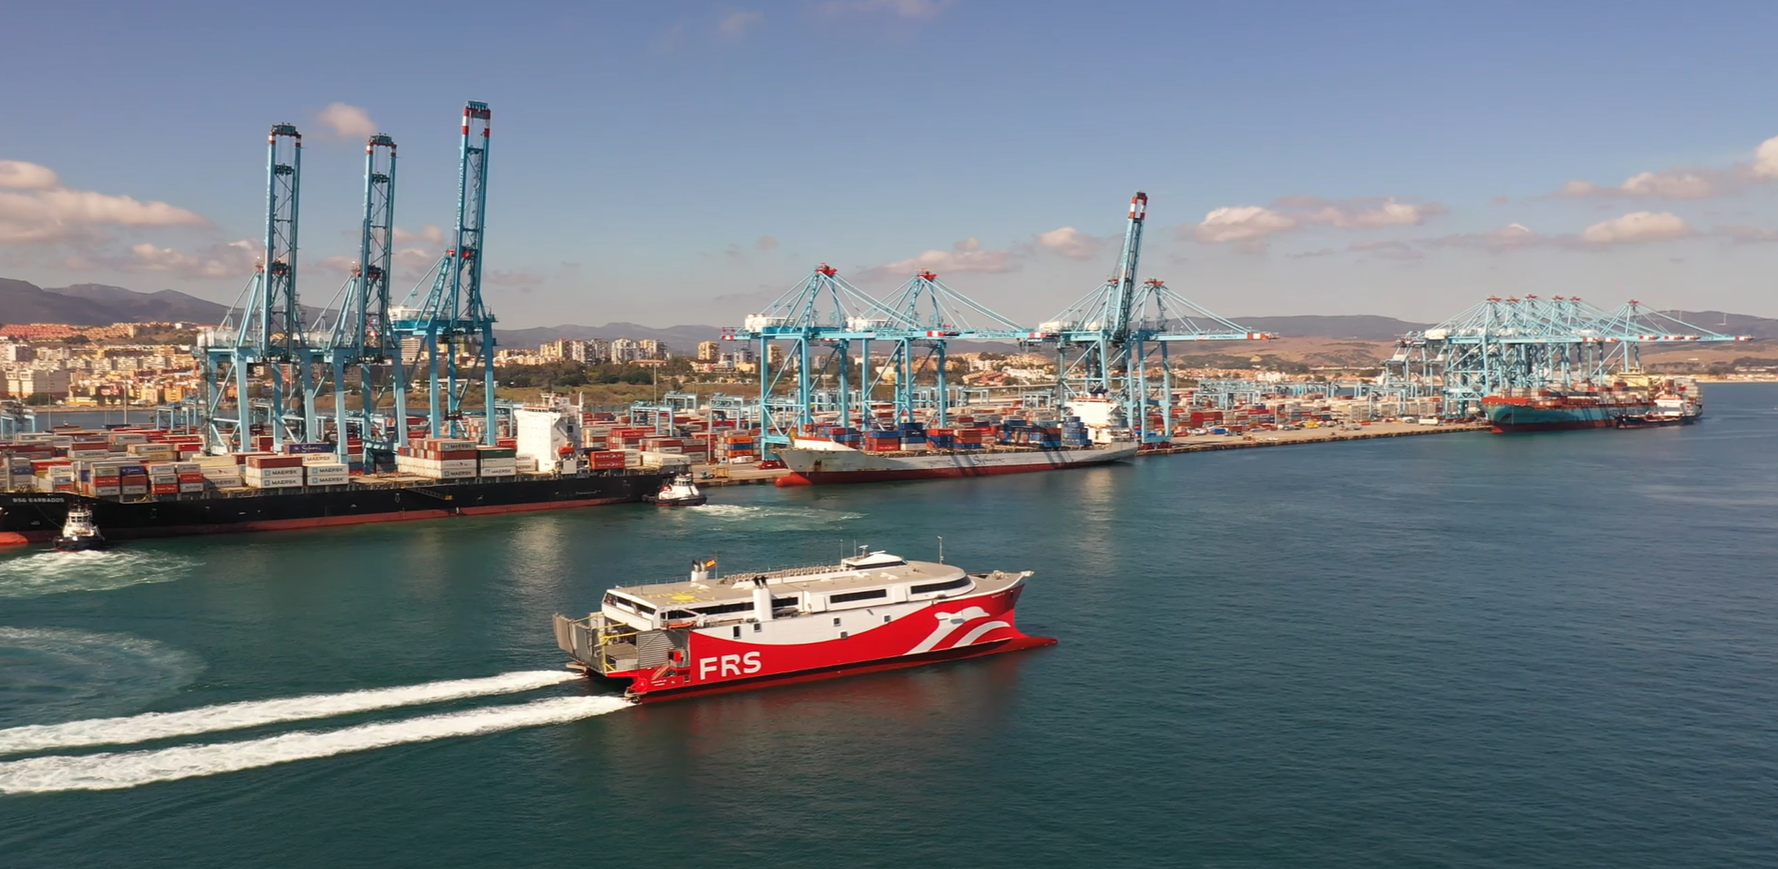 Ferry in FRS livery - Algeciras Port